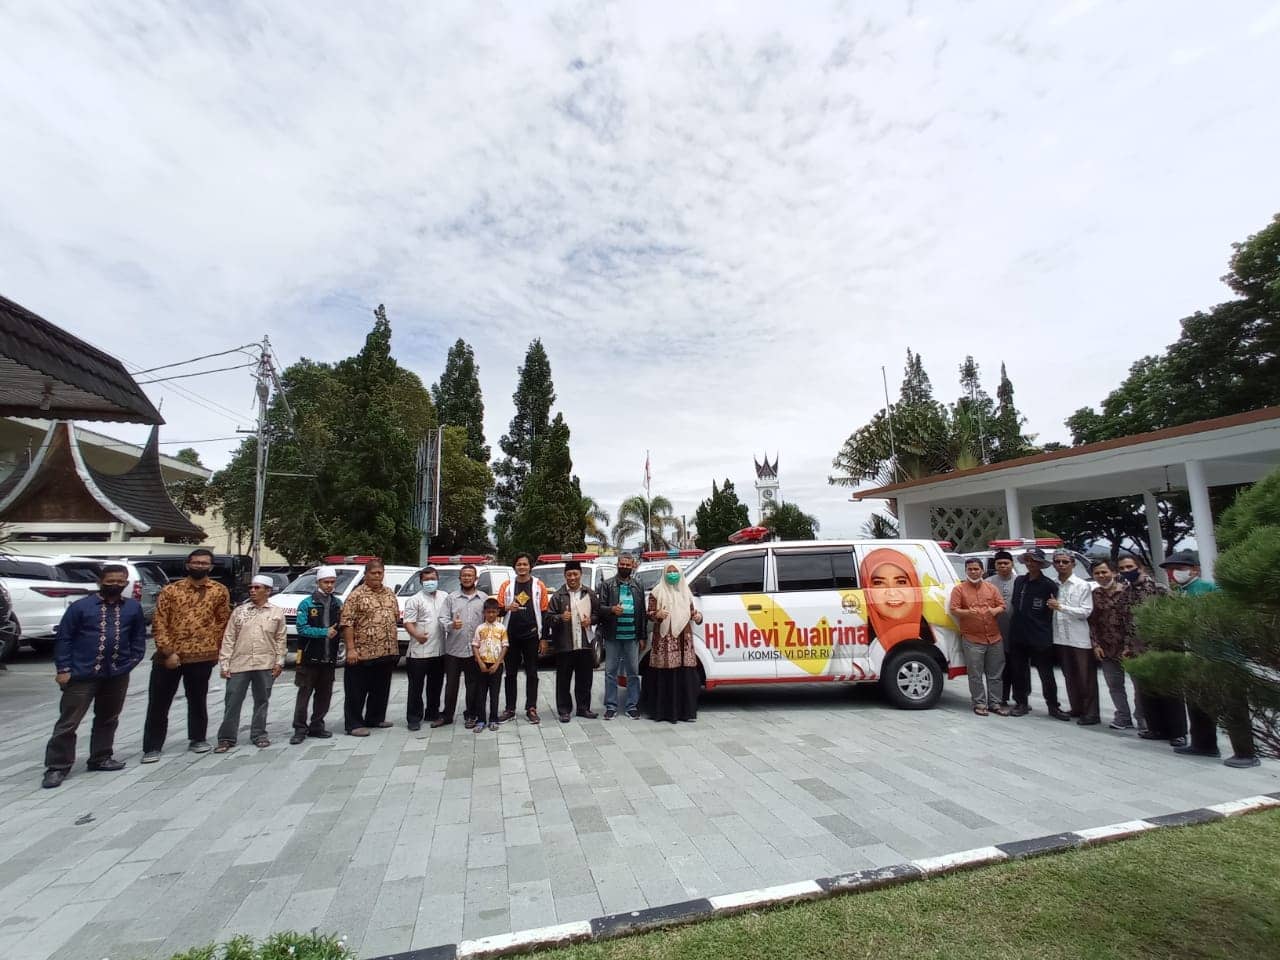 Kunjungan Ke Daerah Pemilihan, Nevi Zuairina Serahkan 8 Ambulan Untuk Pelayanan Sosial Kemasyarakatan